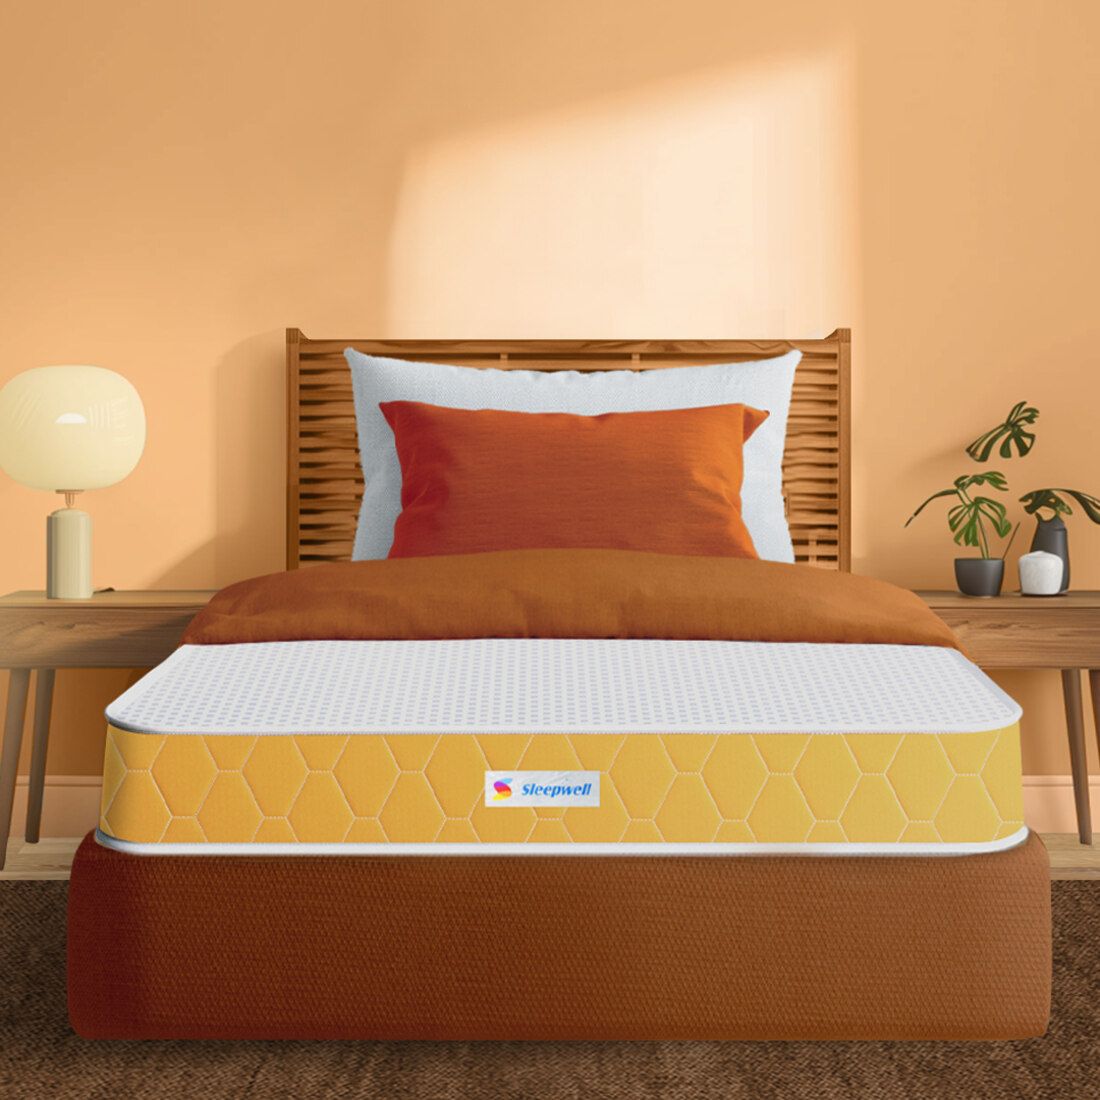 Sleepwell Dual Mattress | Reversible | High Density (HD) Foam | 6-inch Single Bed Size,?Medium Soft & Hard (Orange,72x35X6)